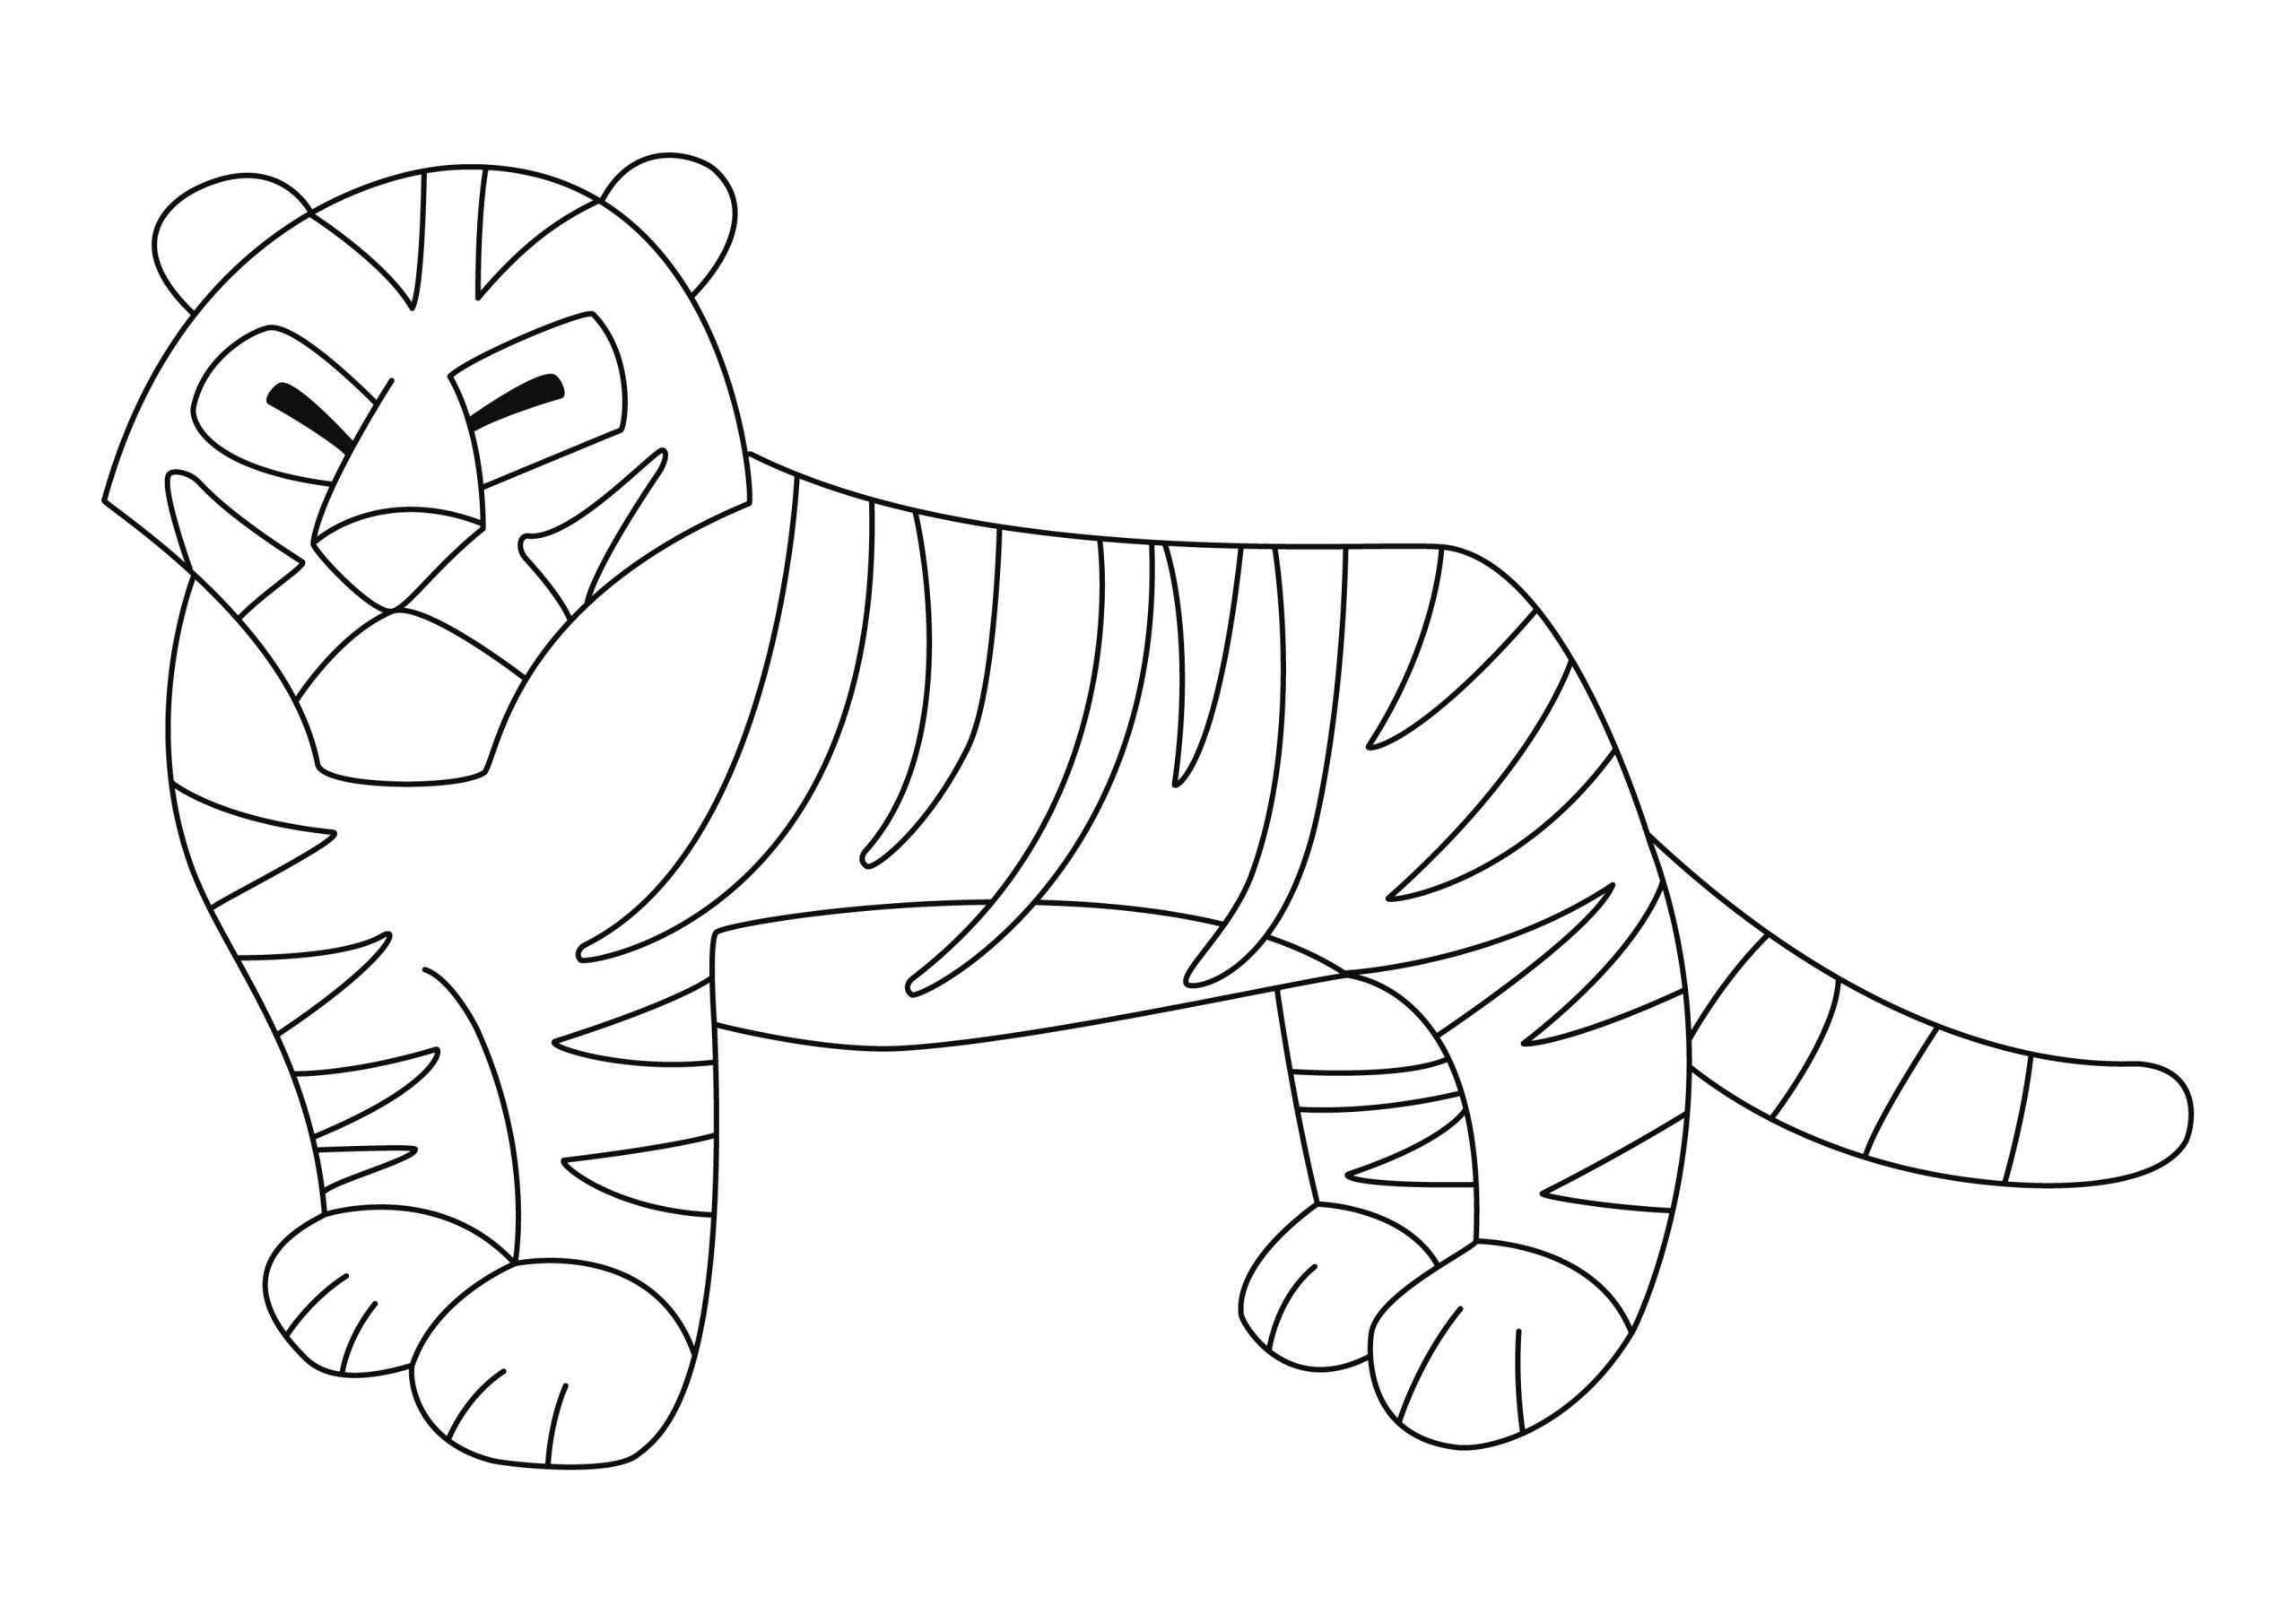 Coloriage - Animaux : Tigre 01 - 10 Doigts destiné Tigre Coloriage 